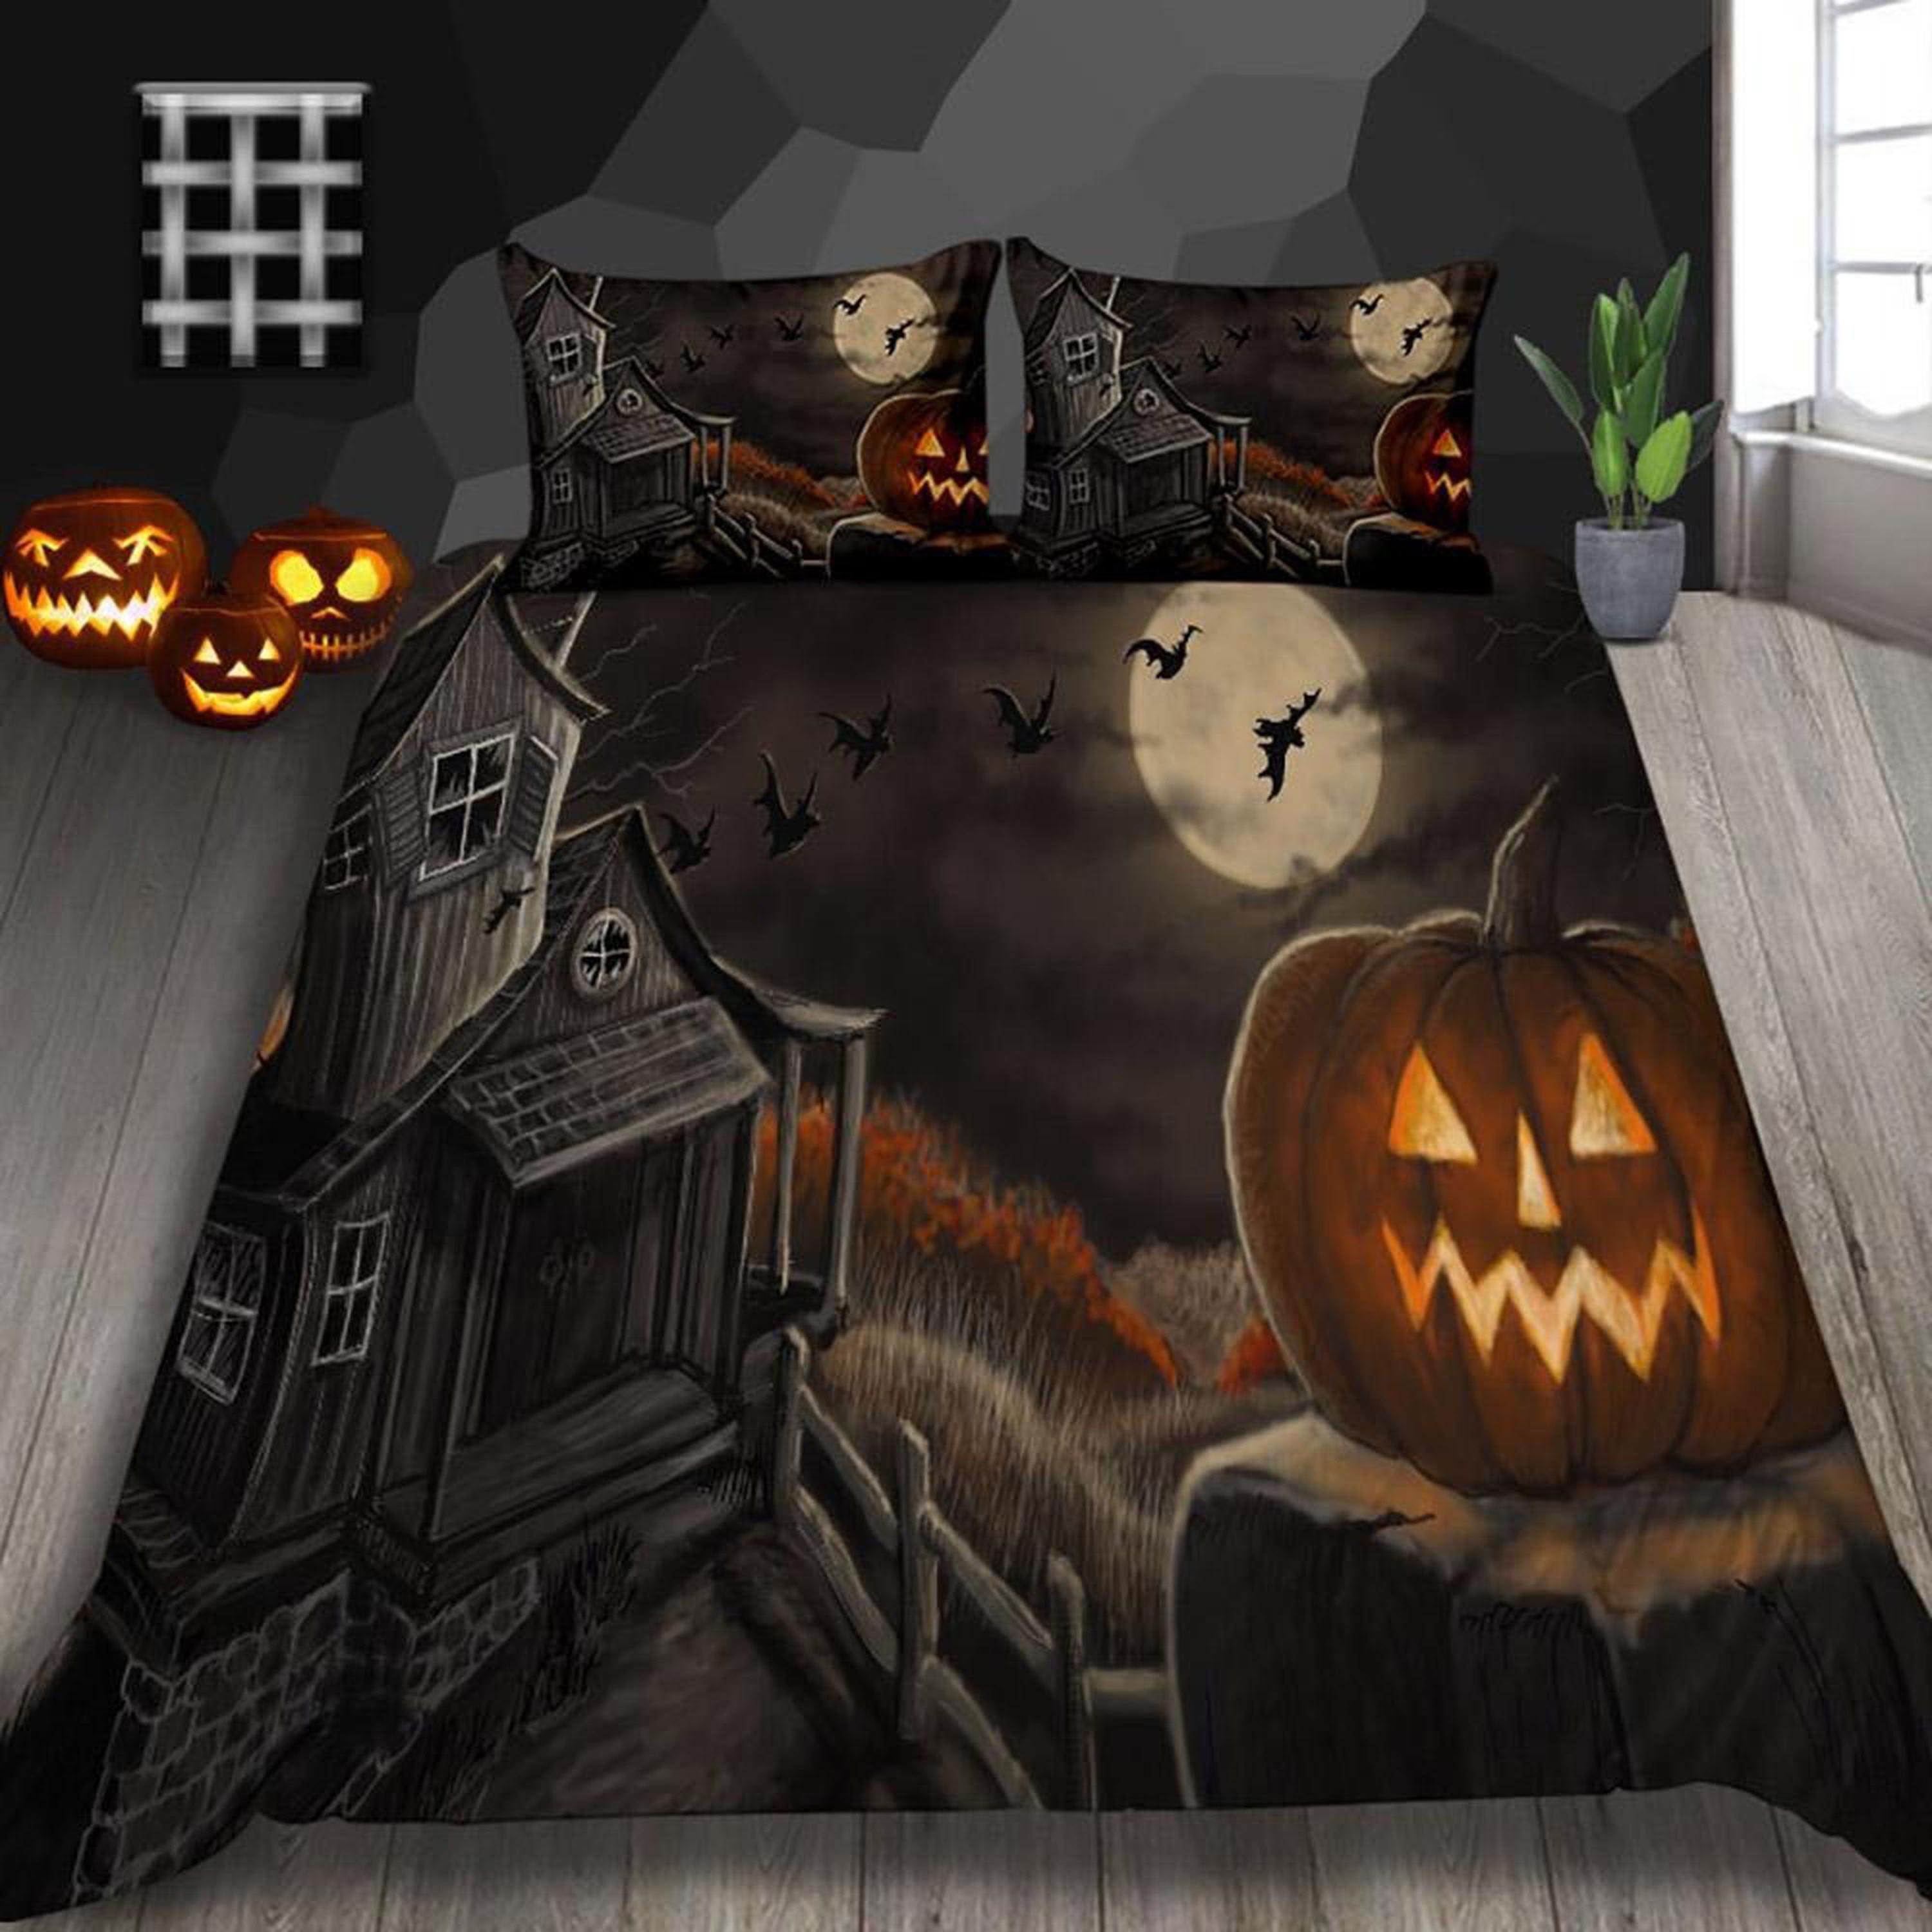 Haunted house pumpkin halloween bedding set